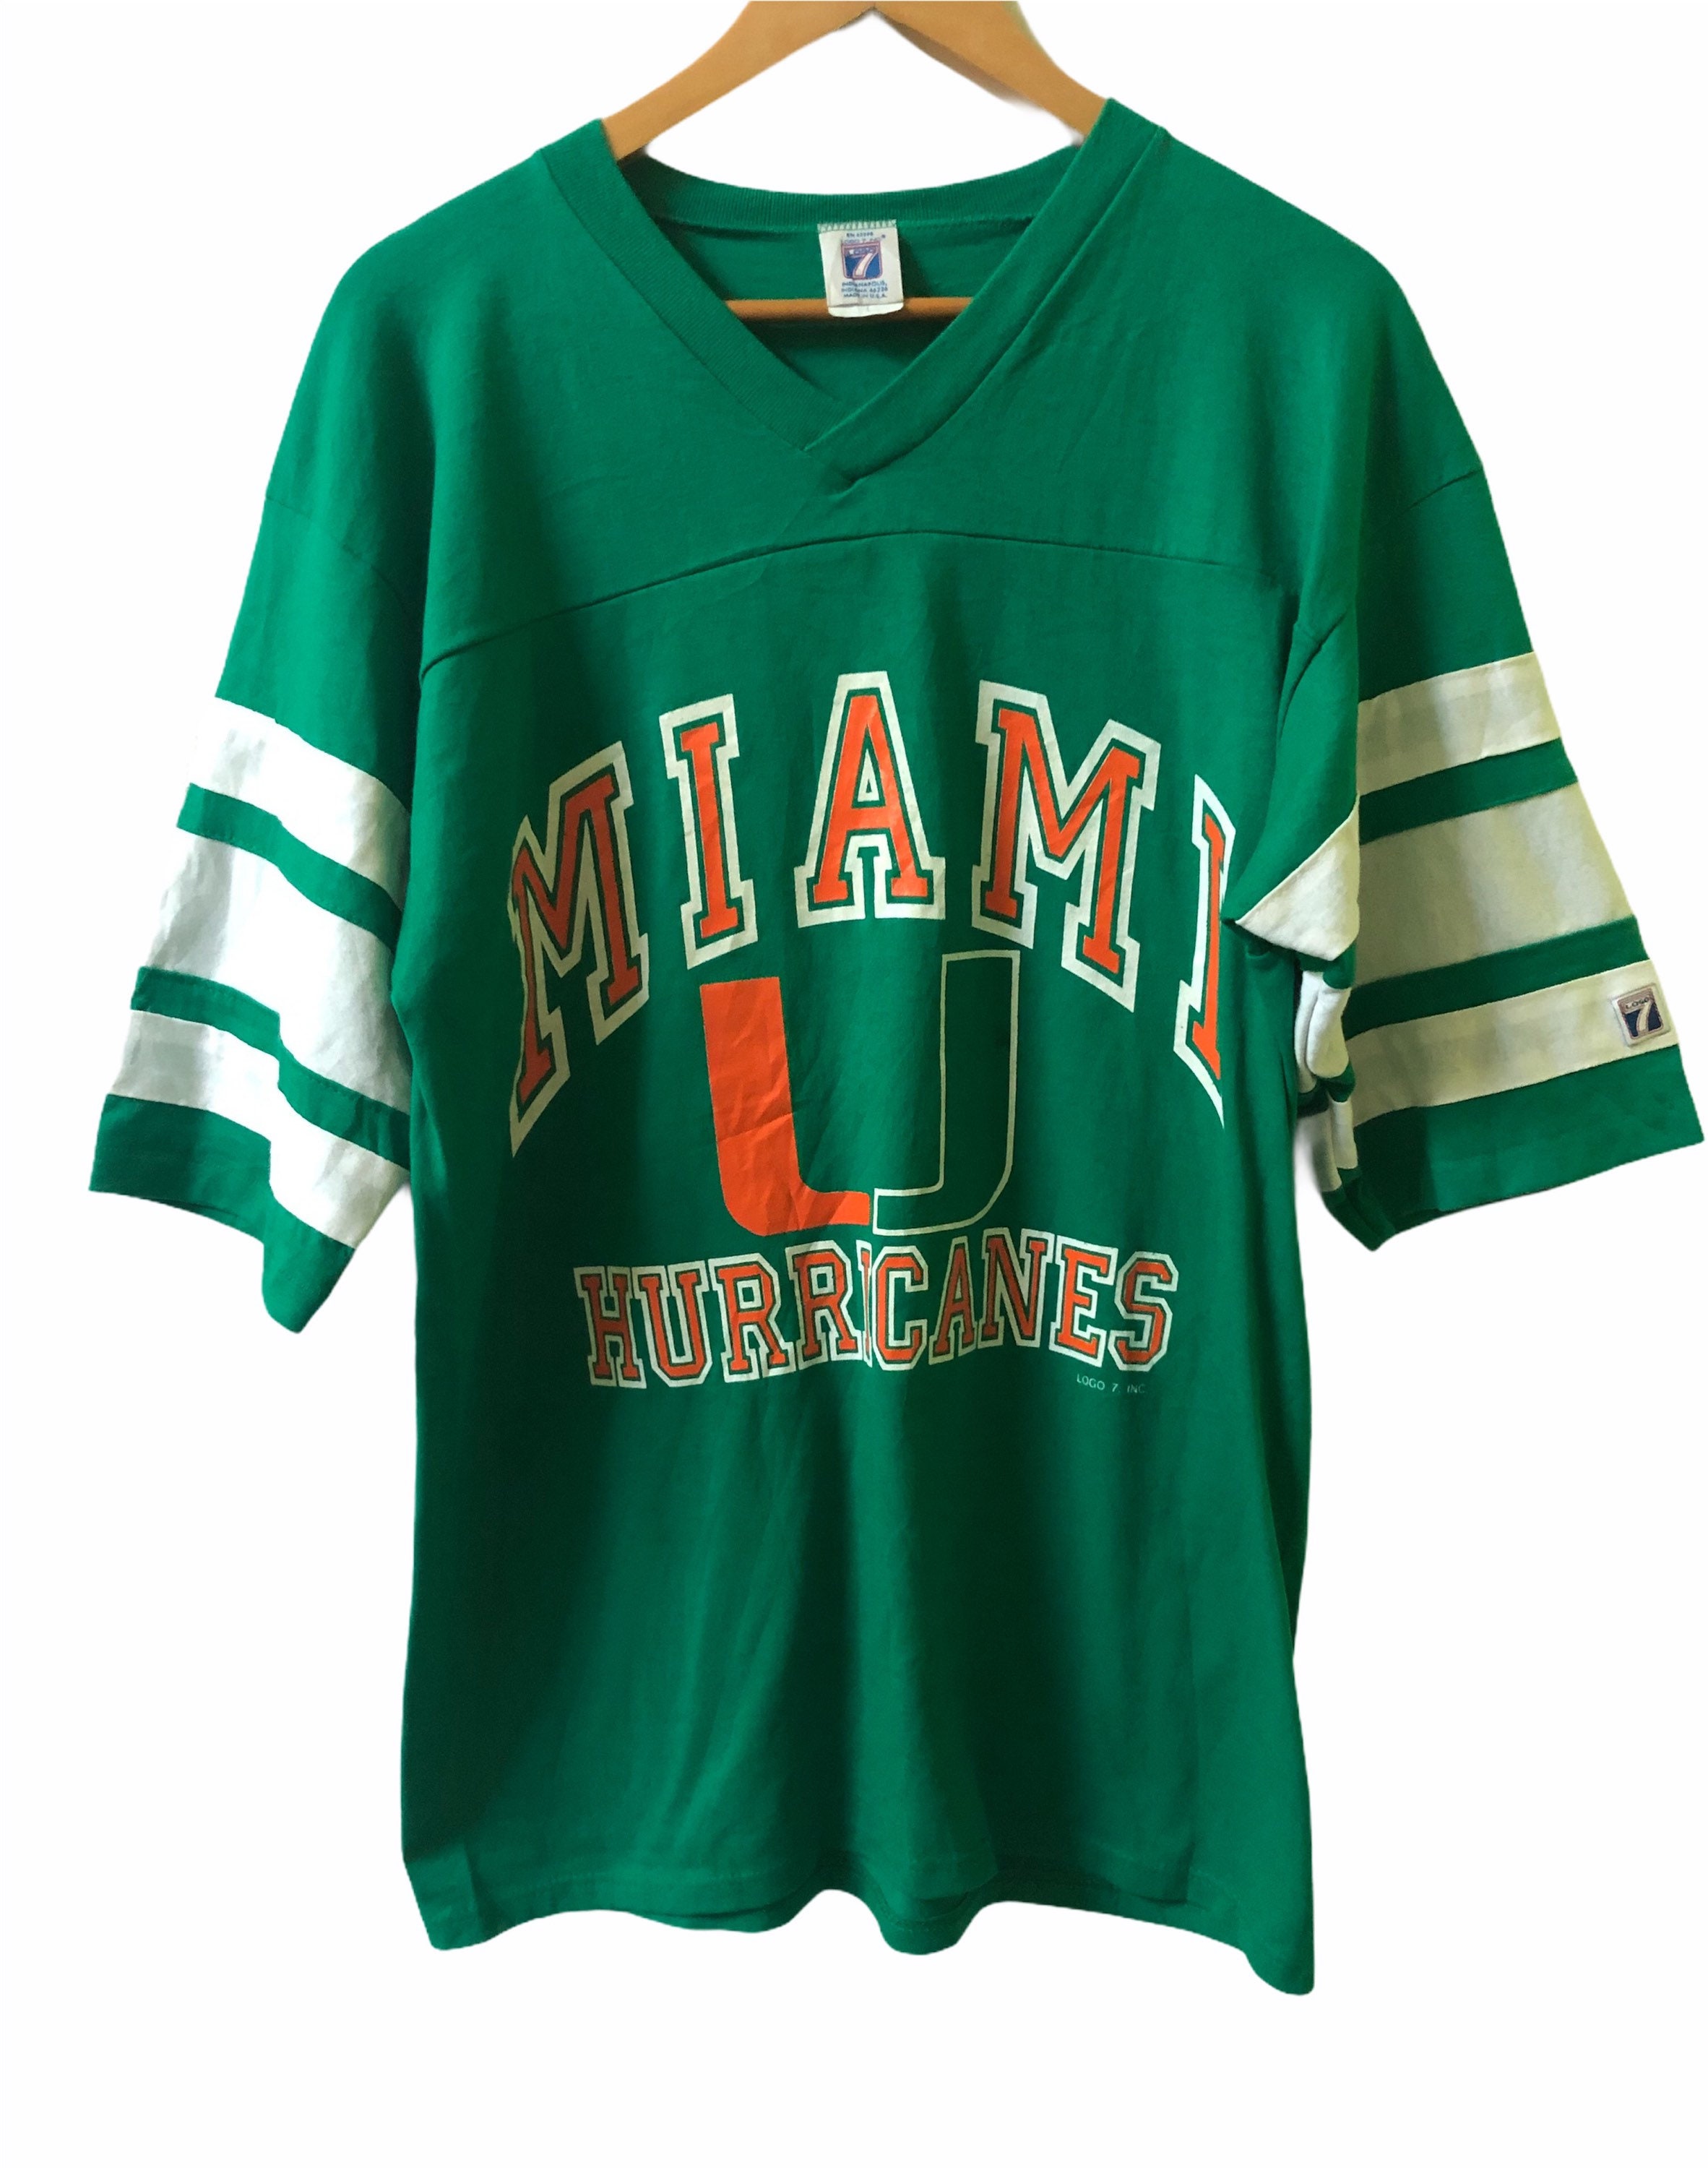 Vintage Miami Hurricanes Mascot Unisex T-Shirt - Teeruto